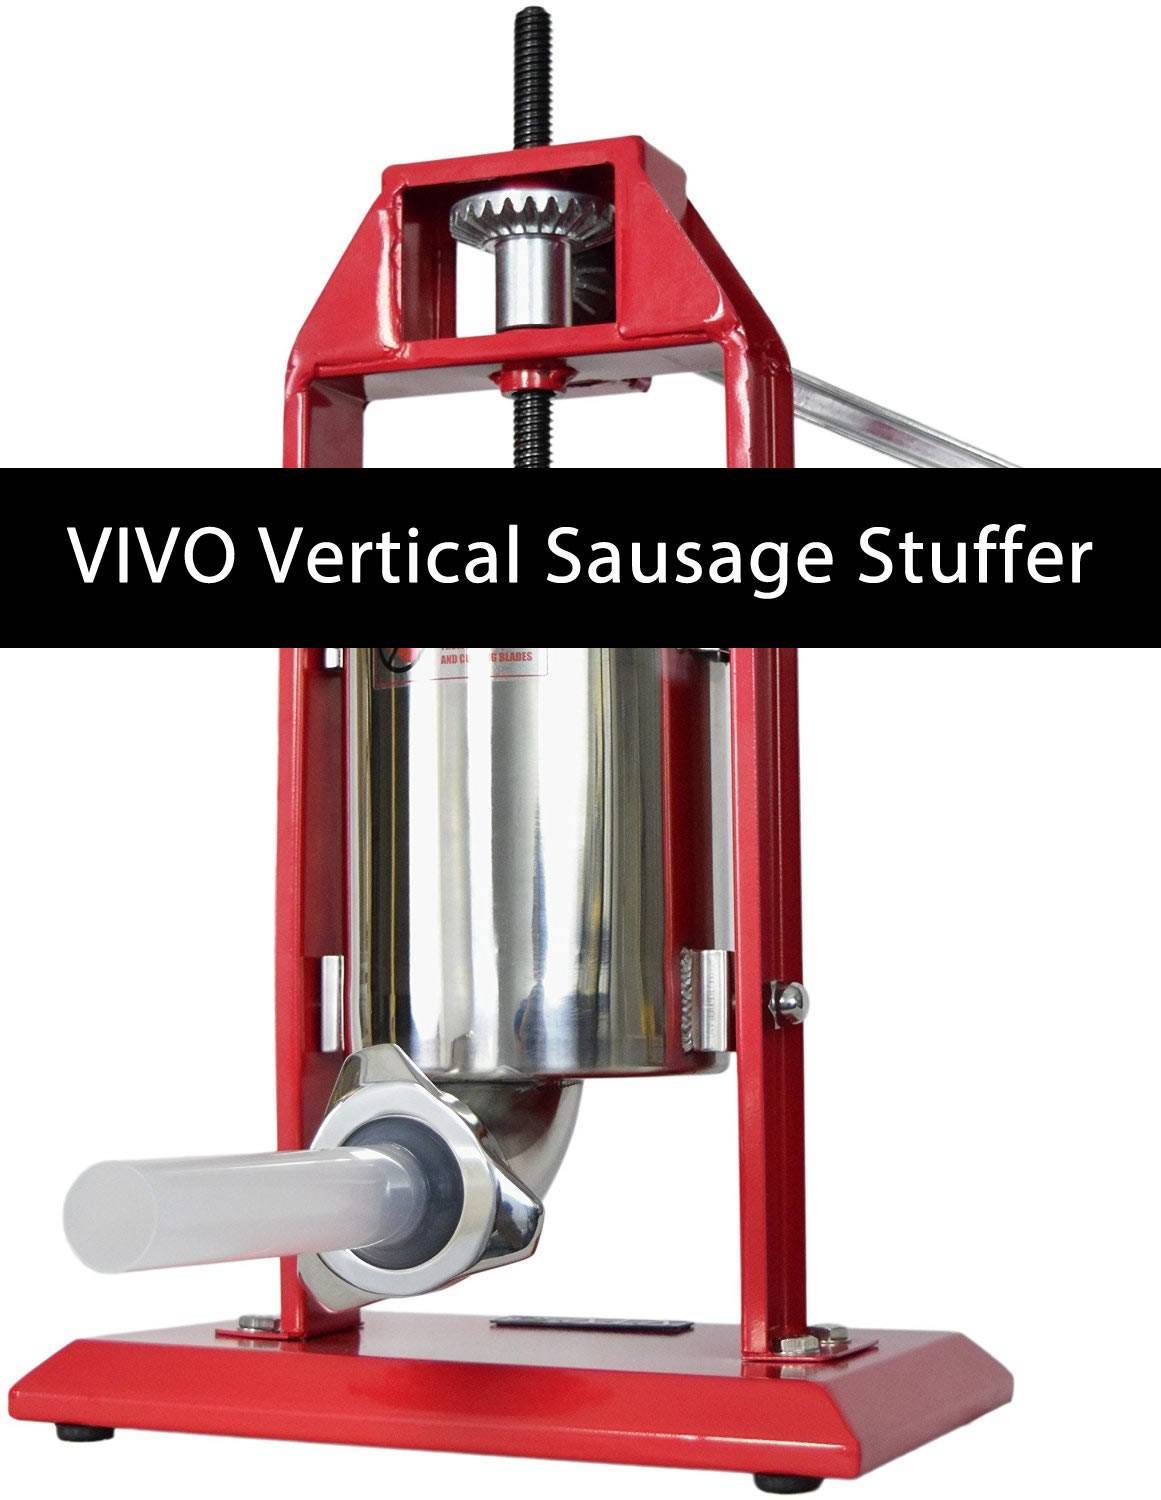 VIVO Vertical Sausage Stuffer